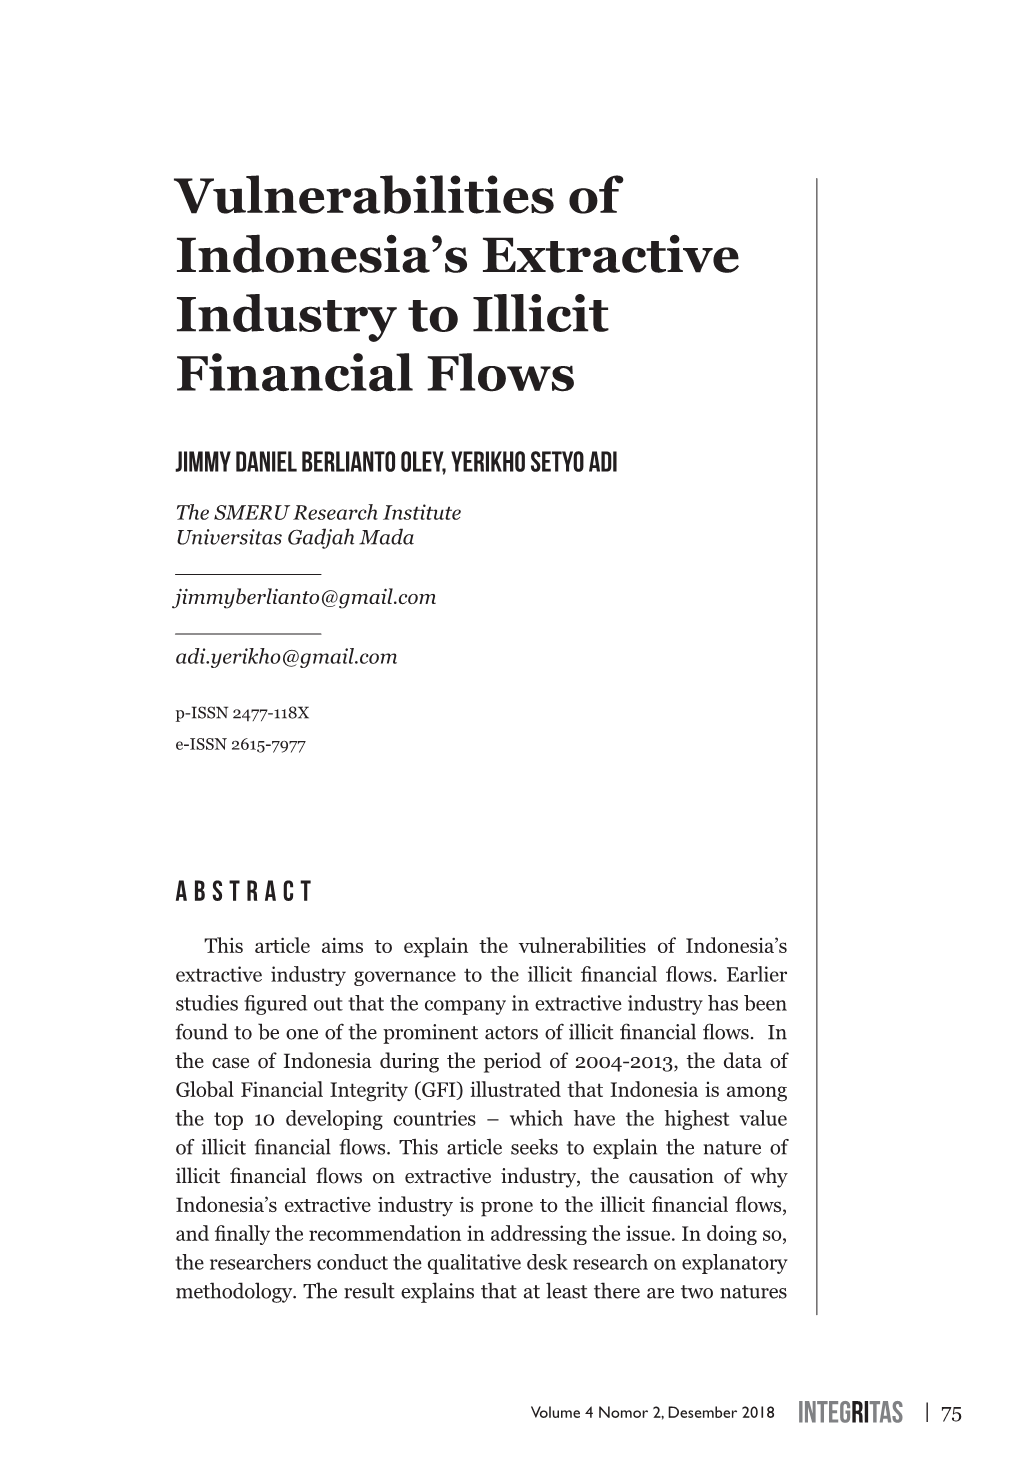 Vulnerabilities of Indonesia's Extractive Industry to Illicit Financial